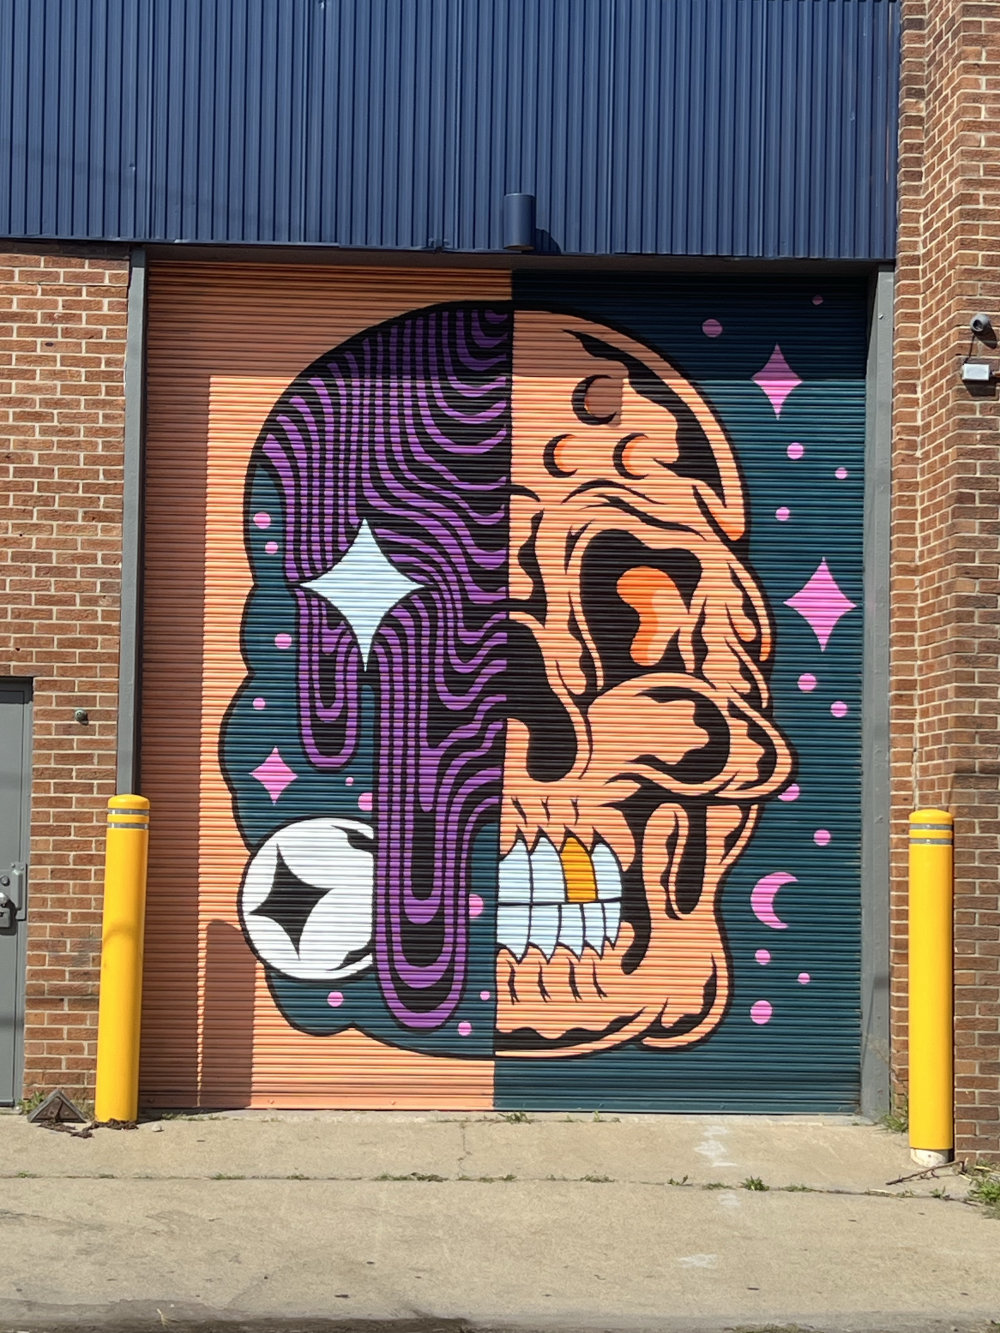 mural in Detroit by artist Jason Abraham Smith.